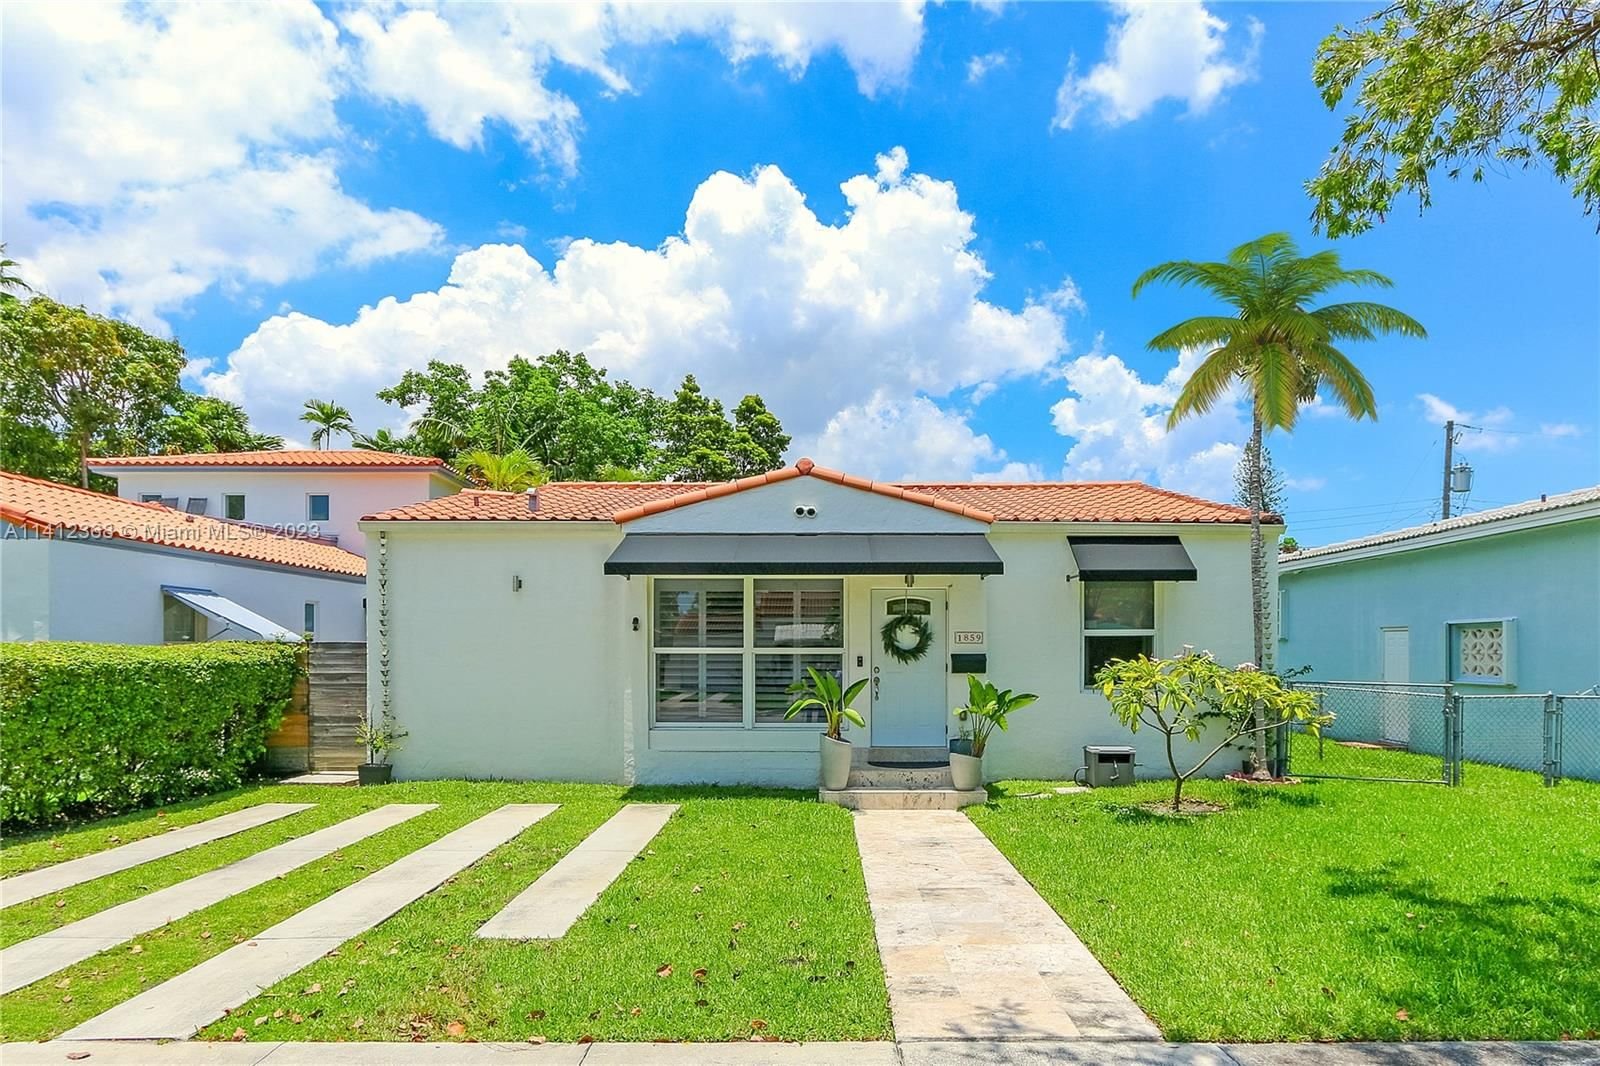 Real estate property located at 1859 16th St, Miami-Dade County, MARLBOROUGH, Miami, FL